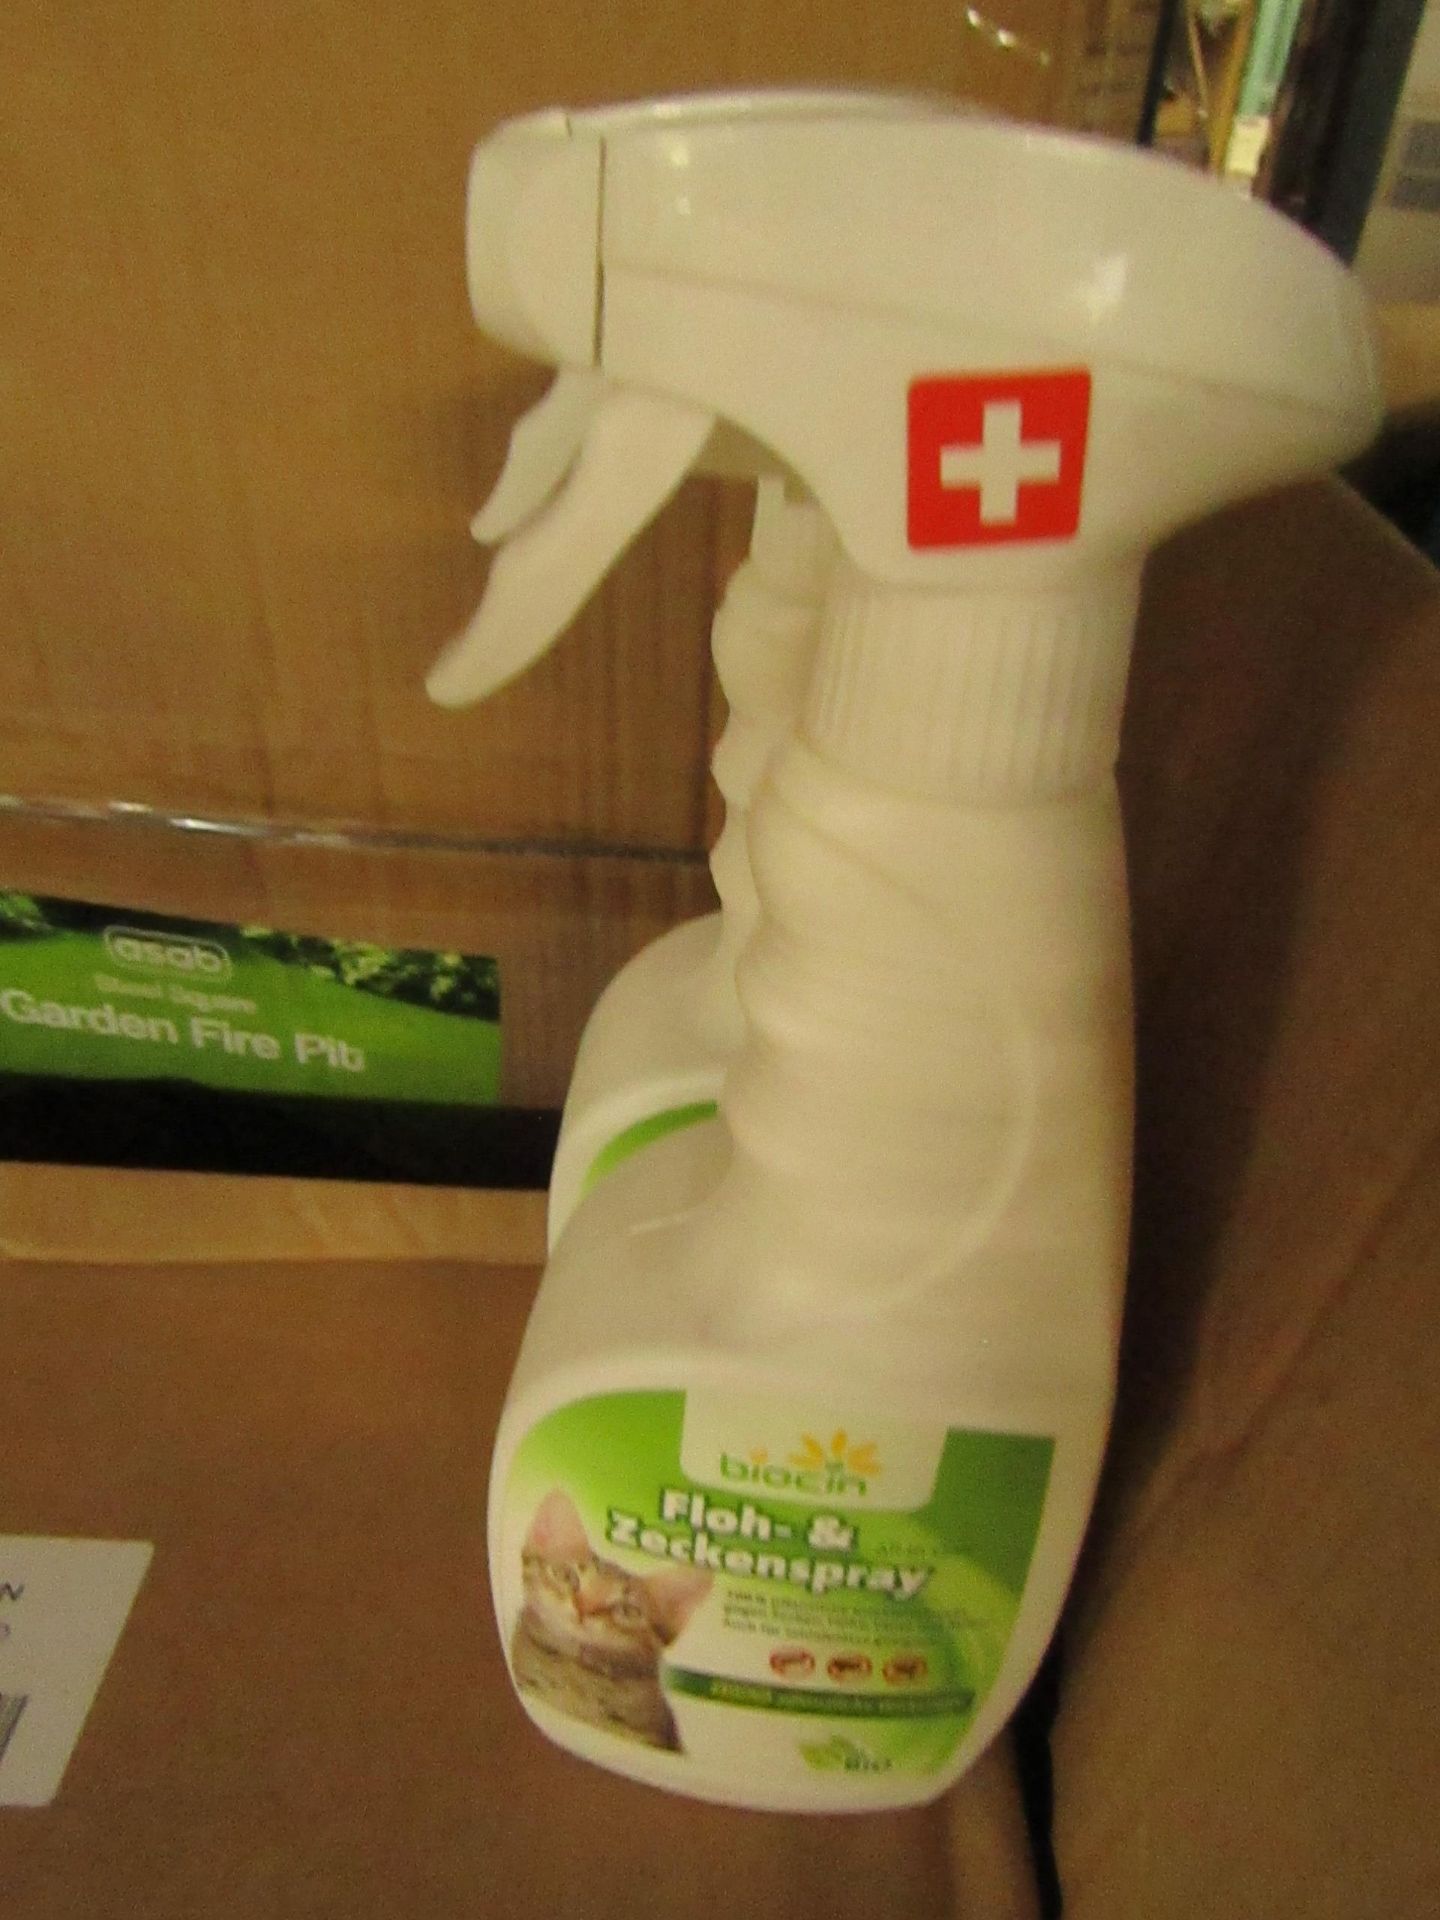 14x Pet Flea Spray - 350ml (Item Writen In German) - Unused & Boxed.